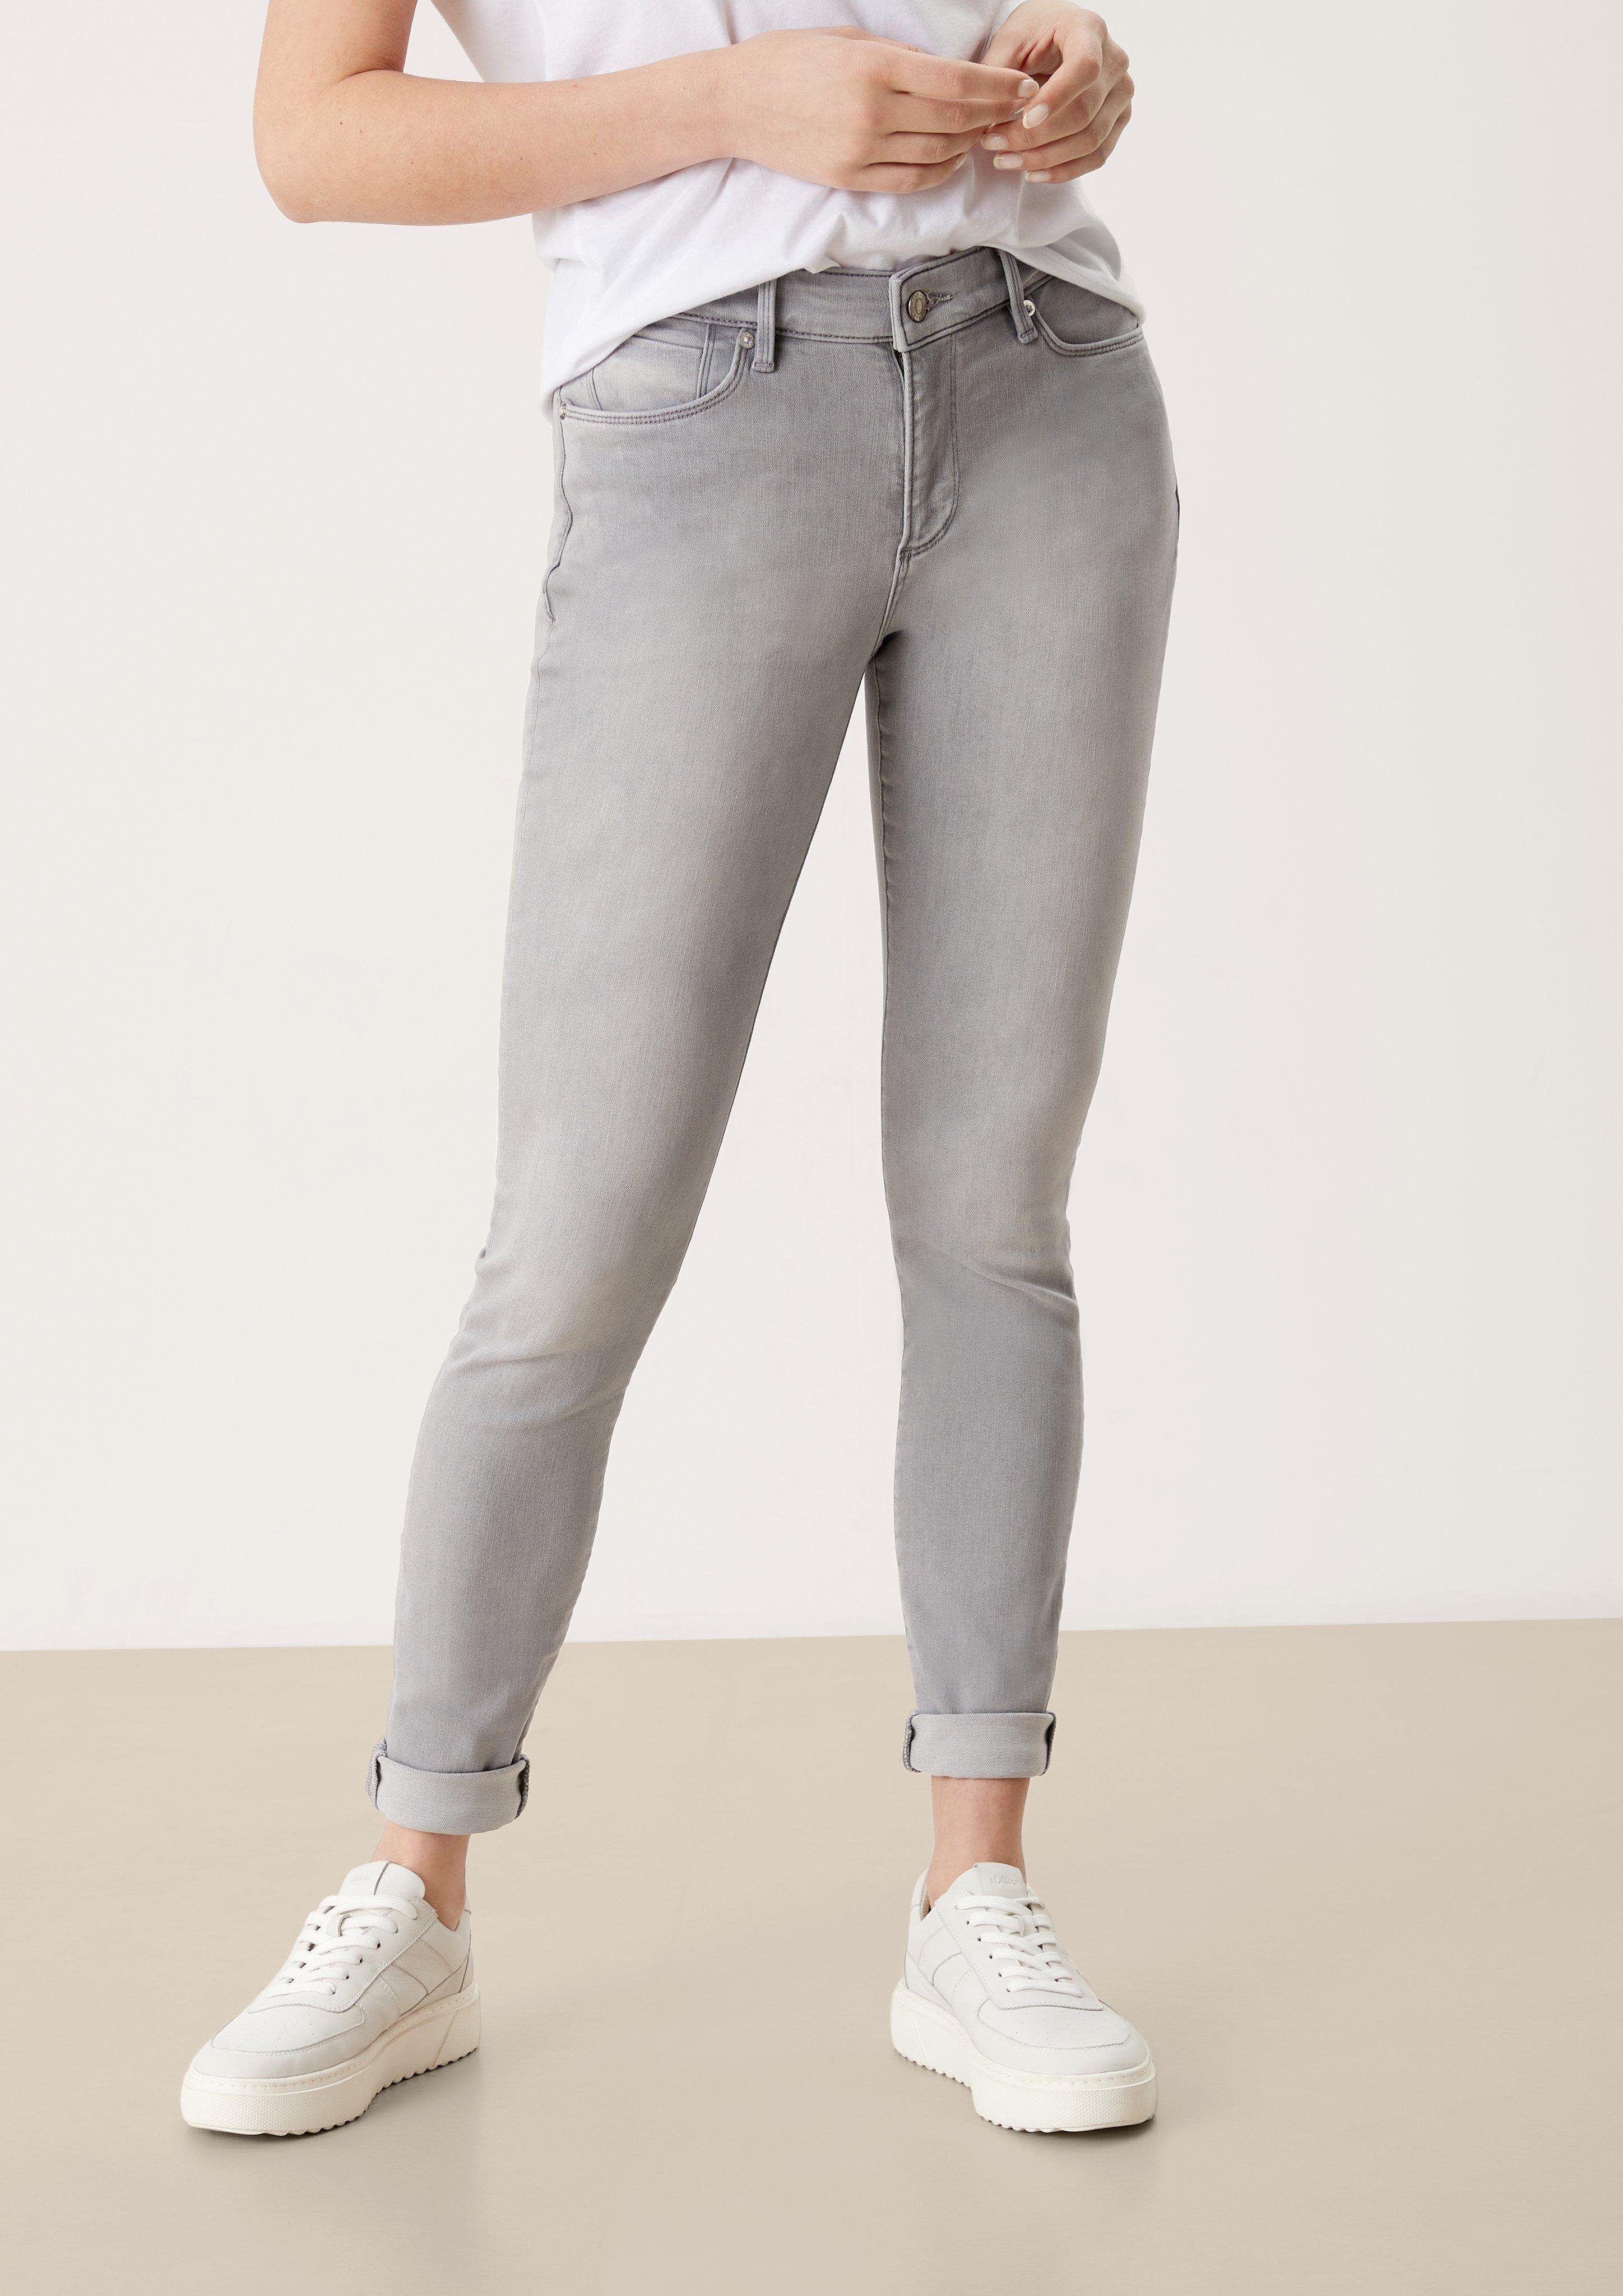 Mid 5-Pocket-Jeans s.Oliver grey Fit Leg Izabell Jeans / light Skinny Skinny / / Rise